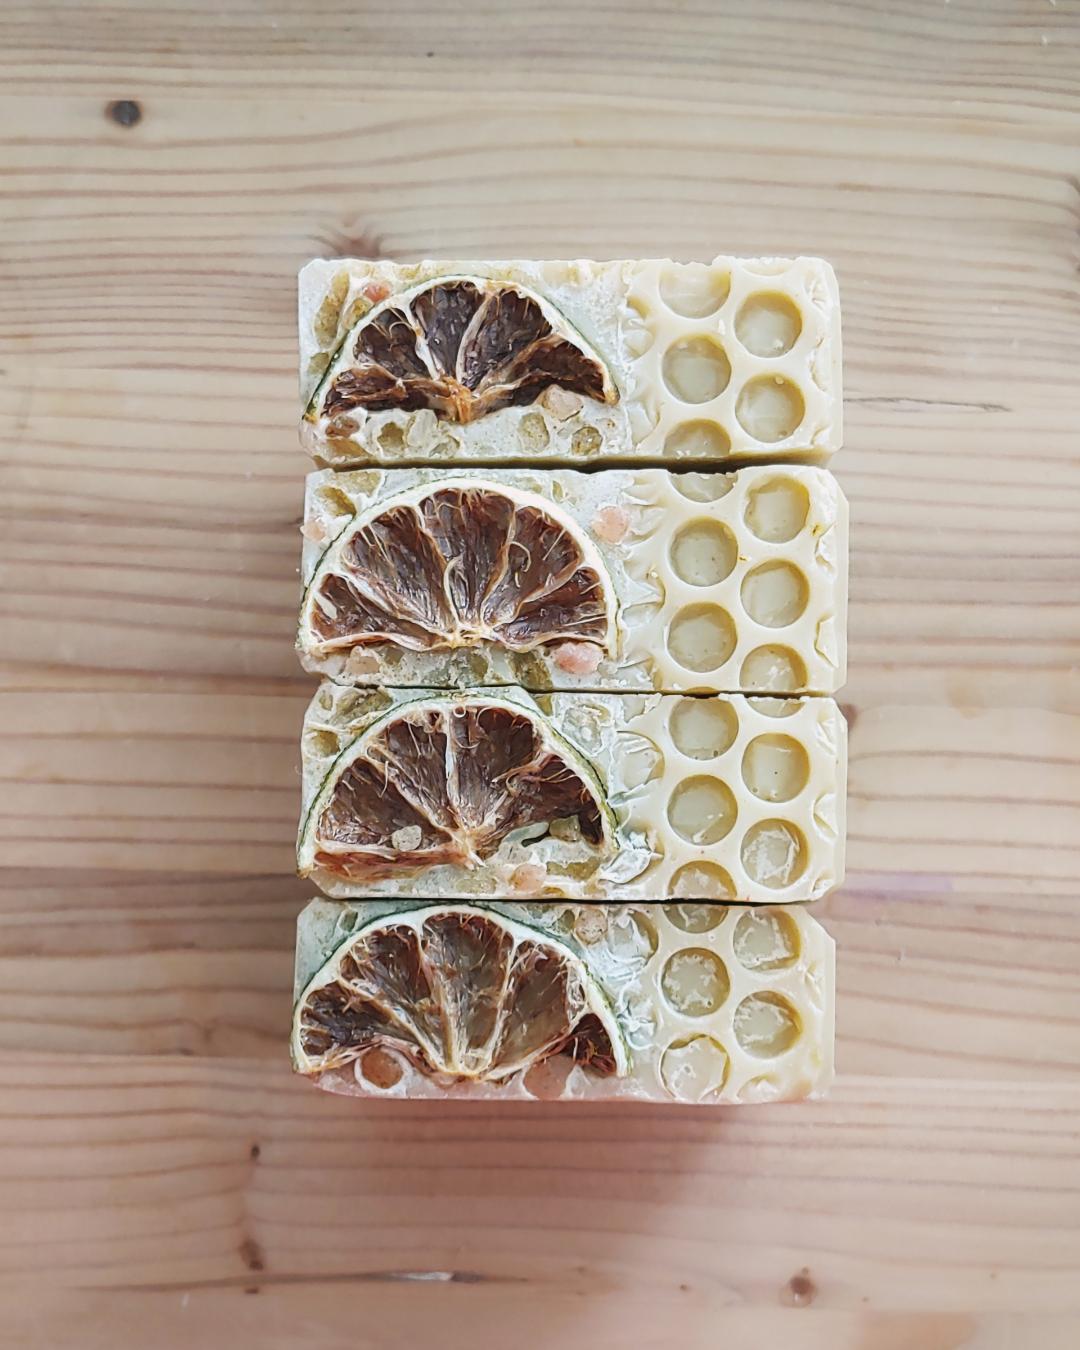 Lime Honeycomb Handmade Essential Oil Soap